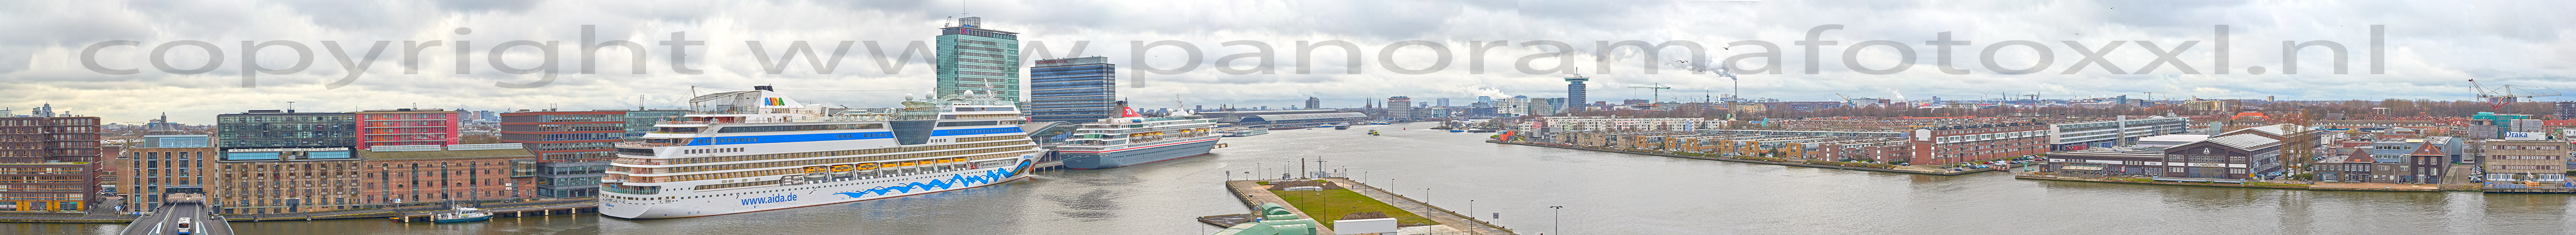 Amsterdam cruise terminal panorama